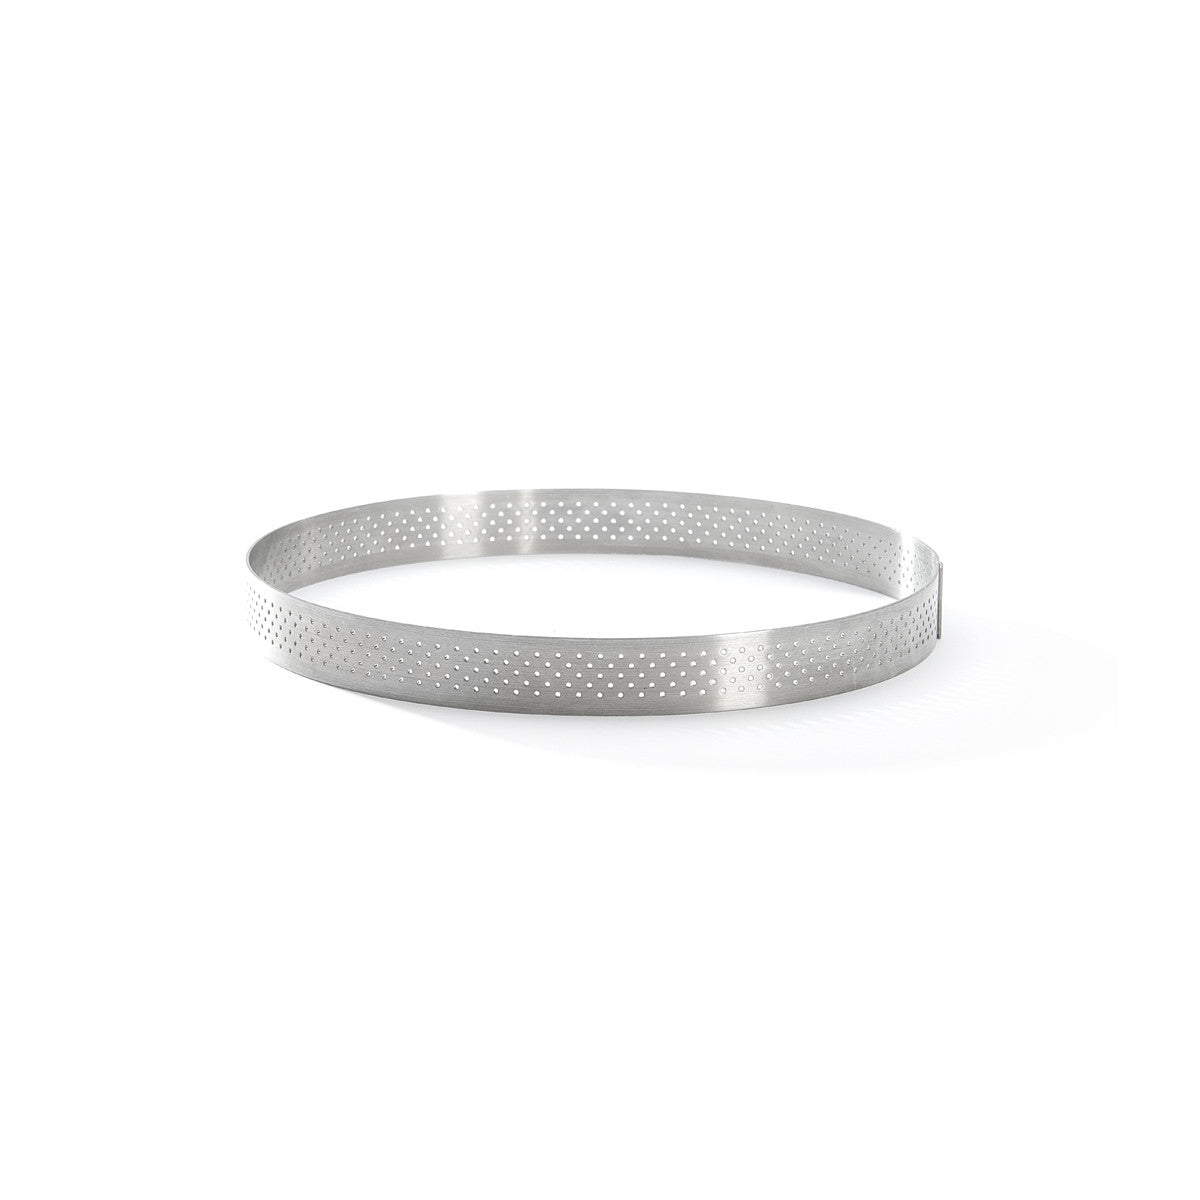 DE BUYER S/S Perforated Round Tart Ring, 7